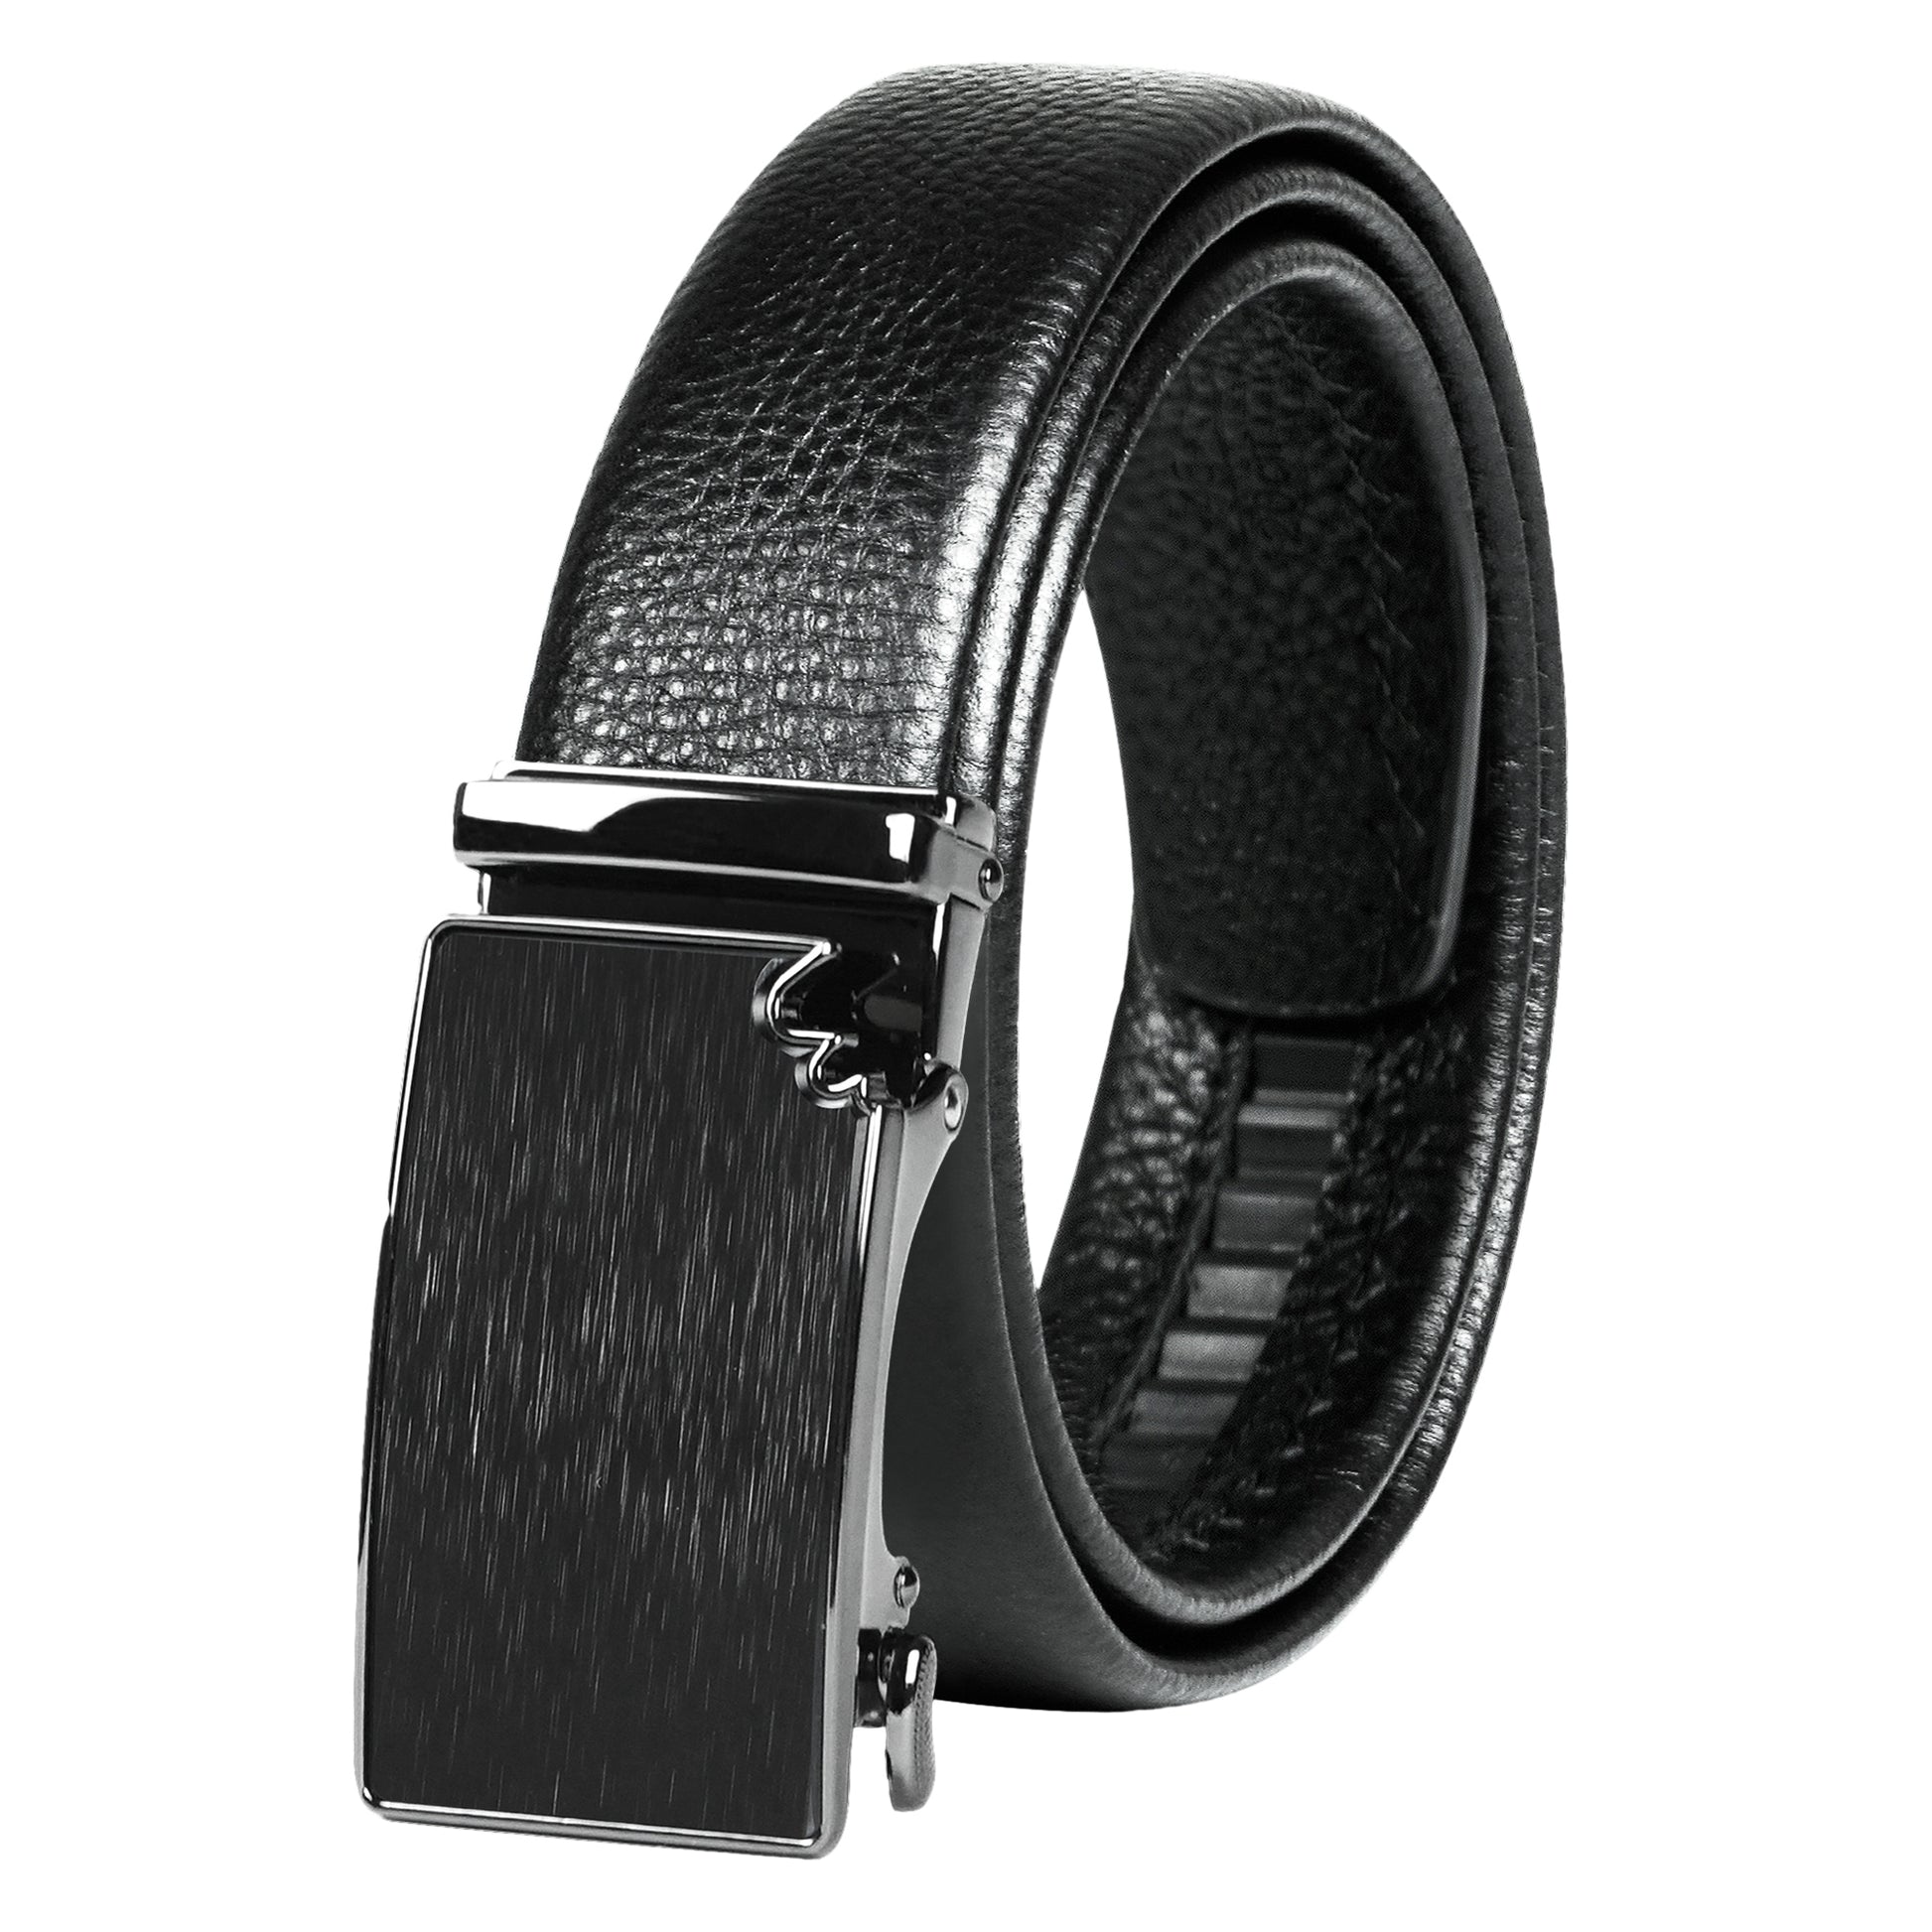 Coipdfty Ratchet Belts for Men As Seen on TV Belts for Men Belt Buckle Work Belts for Men, Men's, Size: 31- 36waist Adjustable, Gold